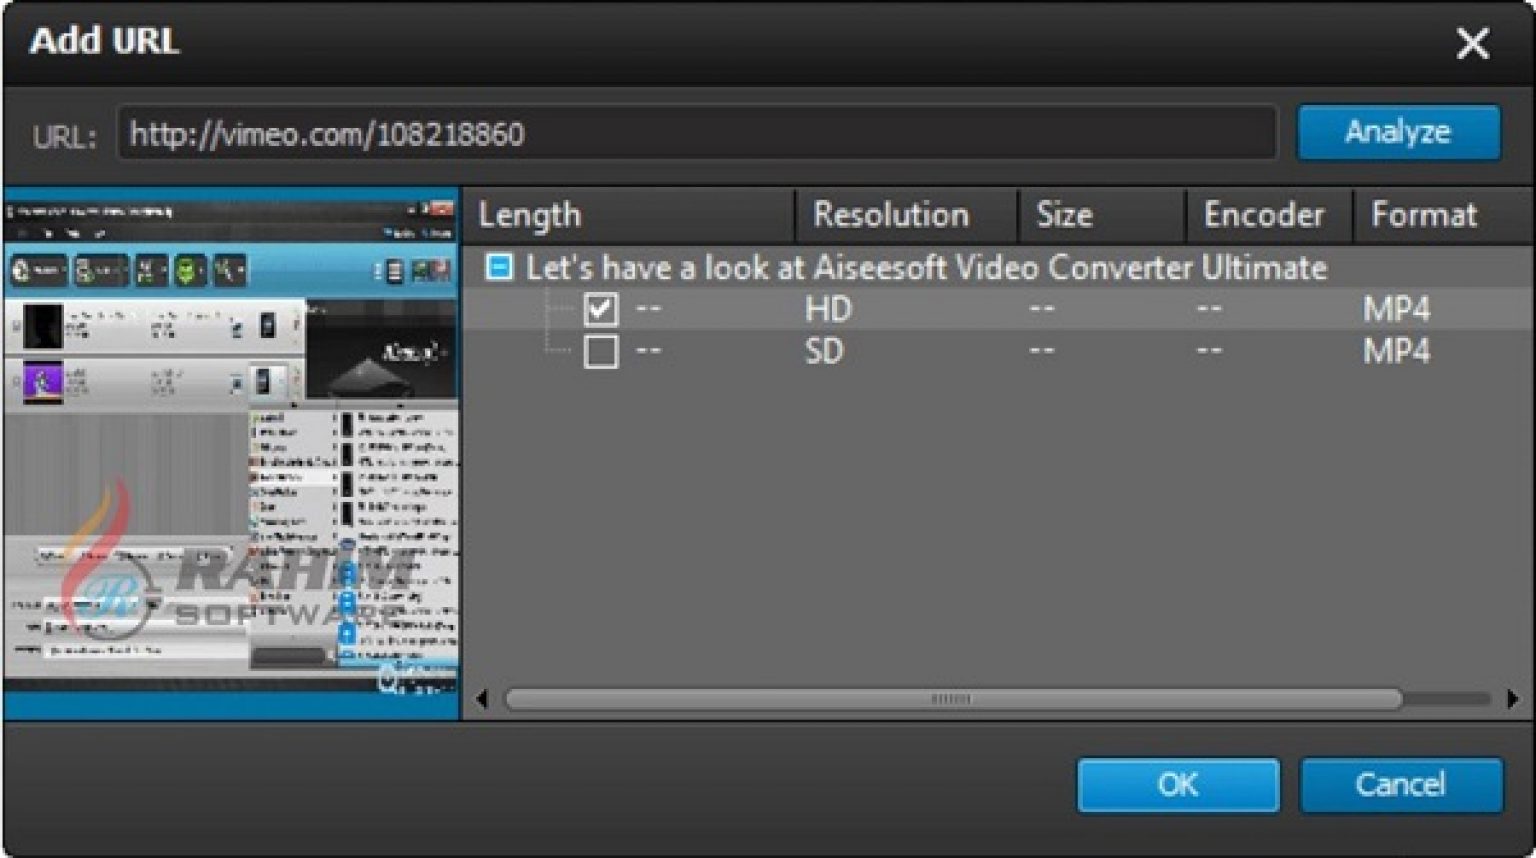 aiseesoft video converter ultimate 9.2.28 crack